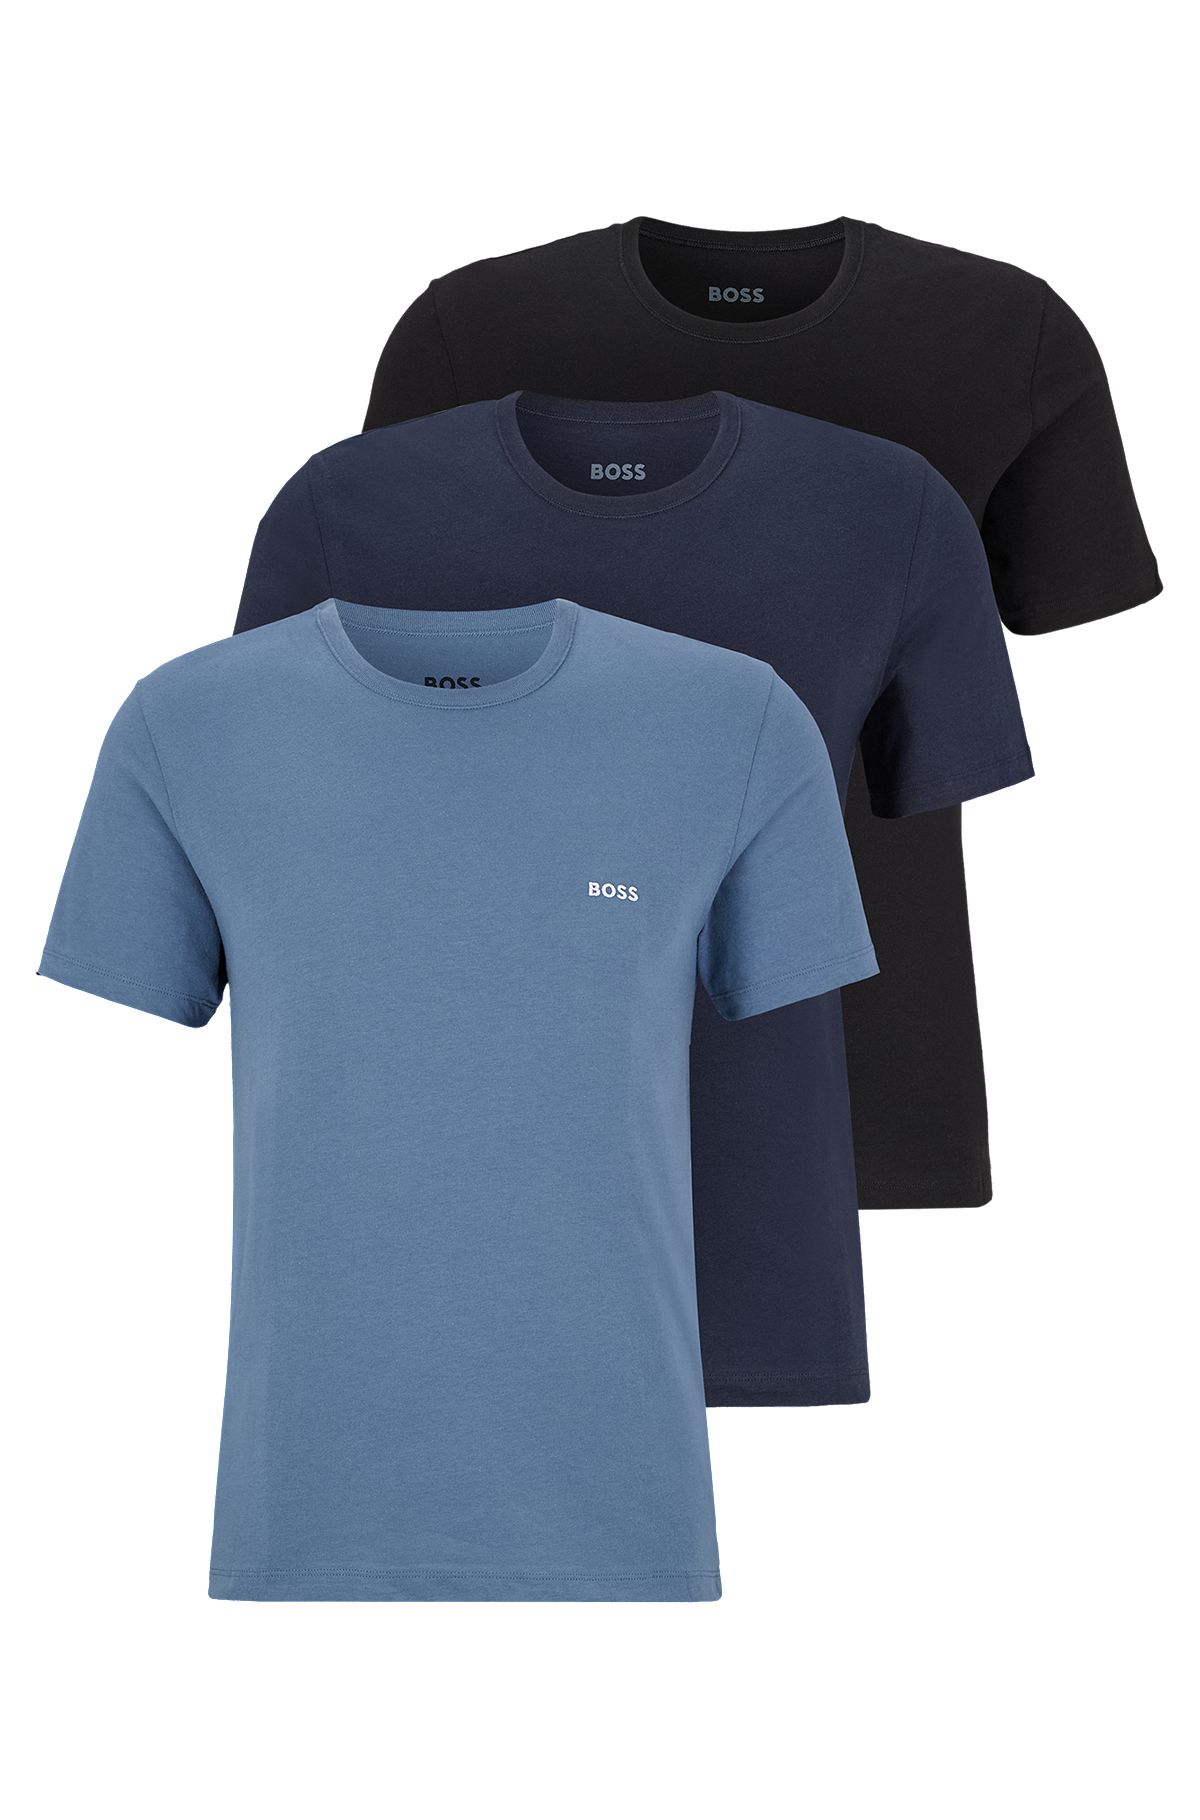 Three-pack of underwear T-shirts in cotton jersey, Black  /  Blue